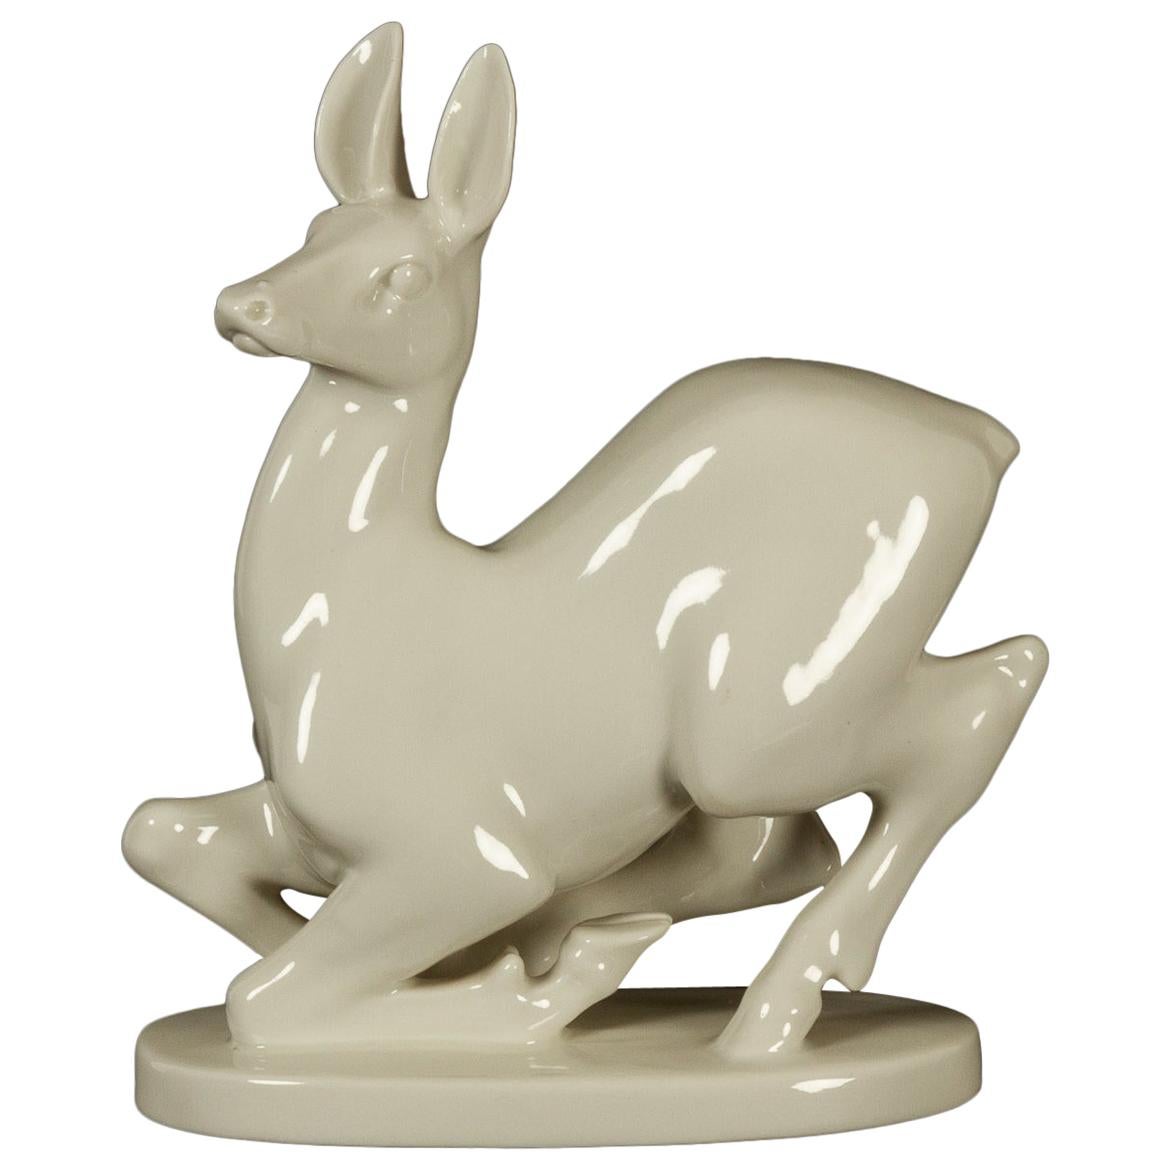 Vintage Porcelain Deer Figurine by Lomonosov